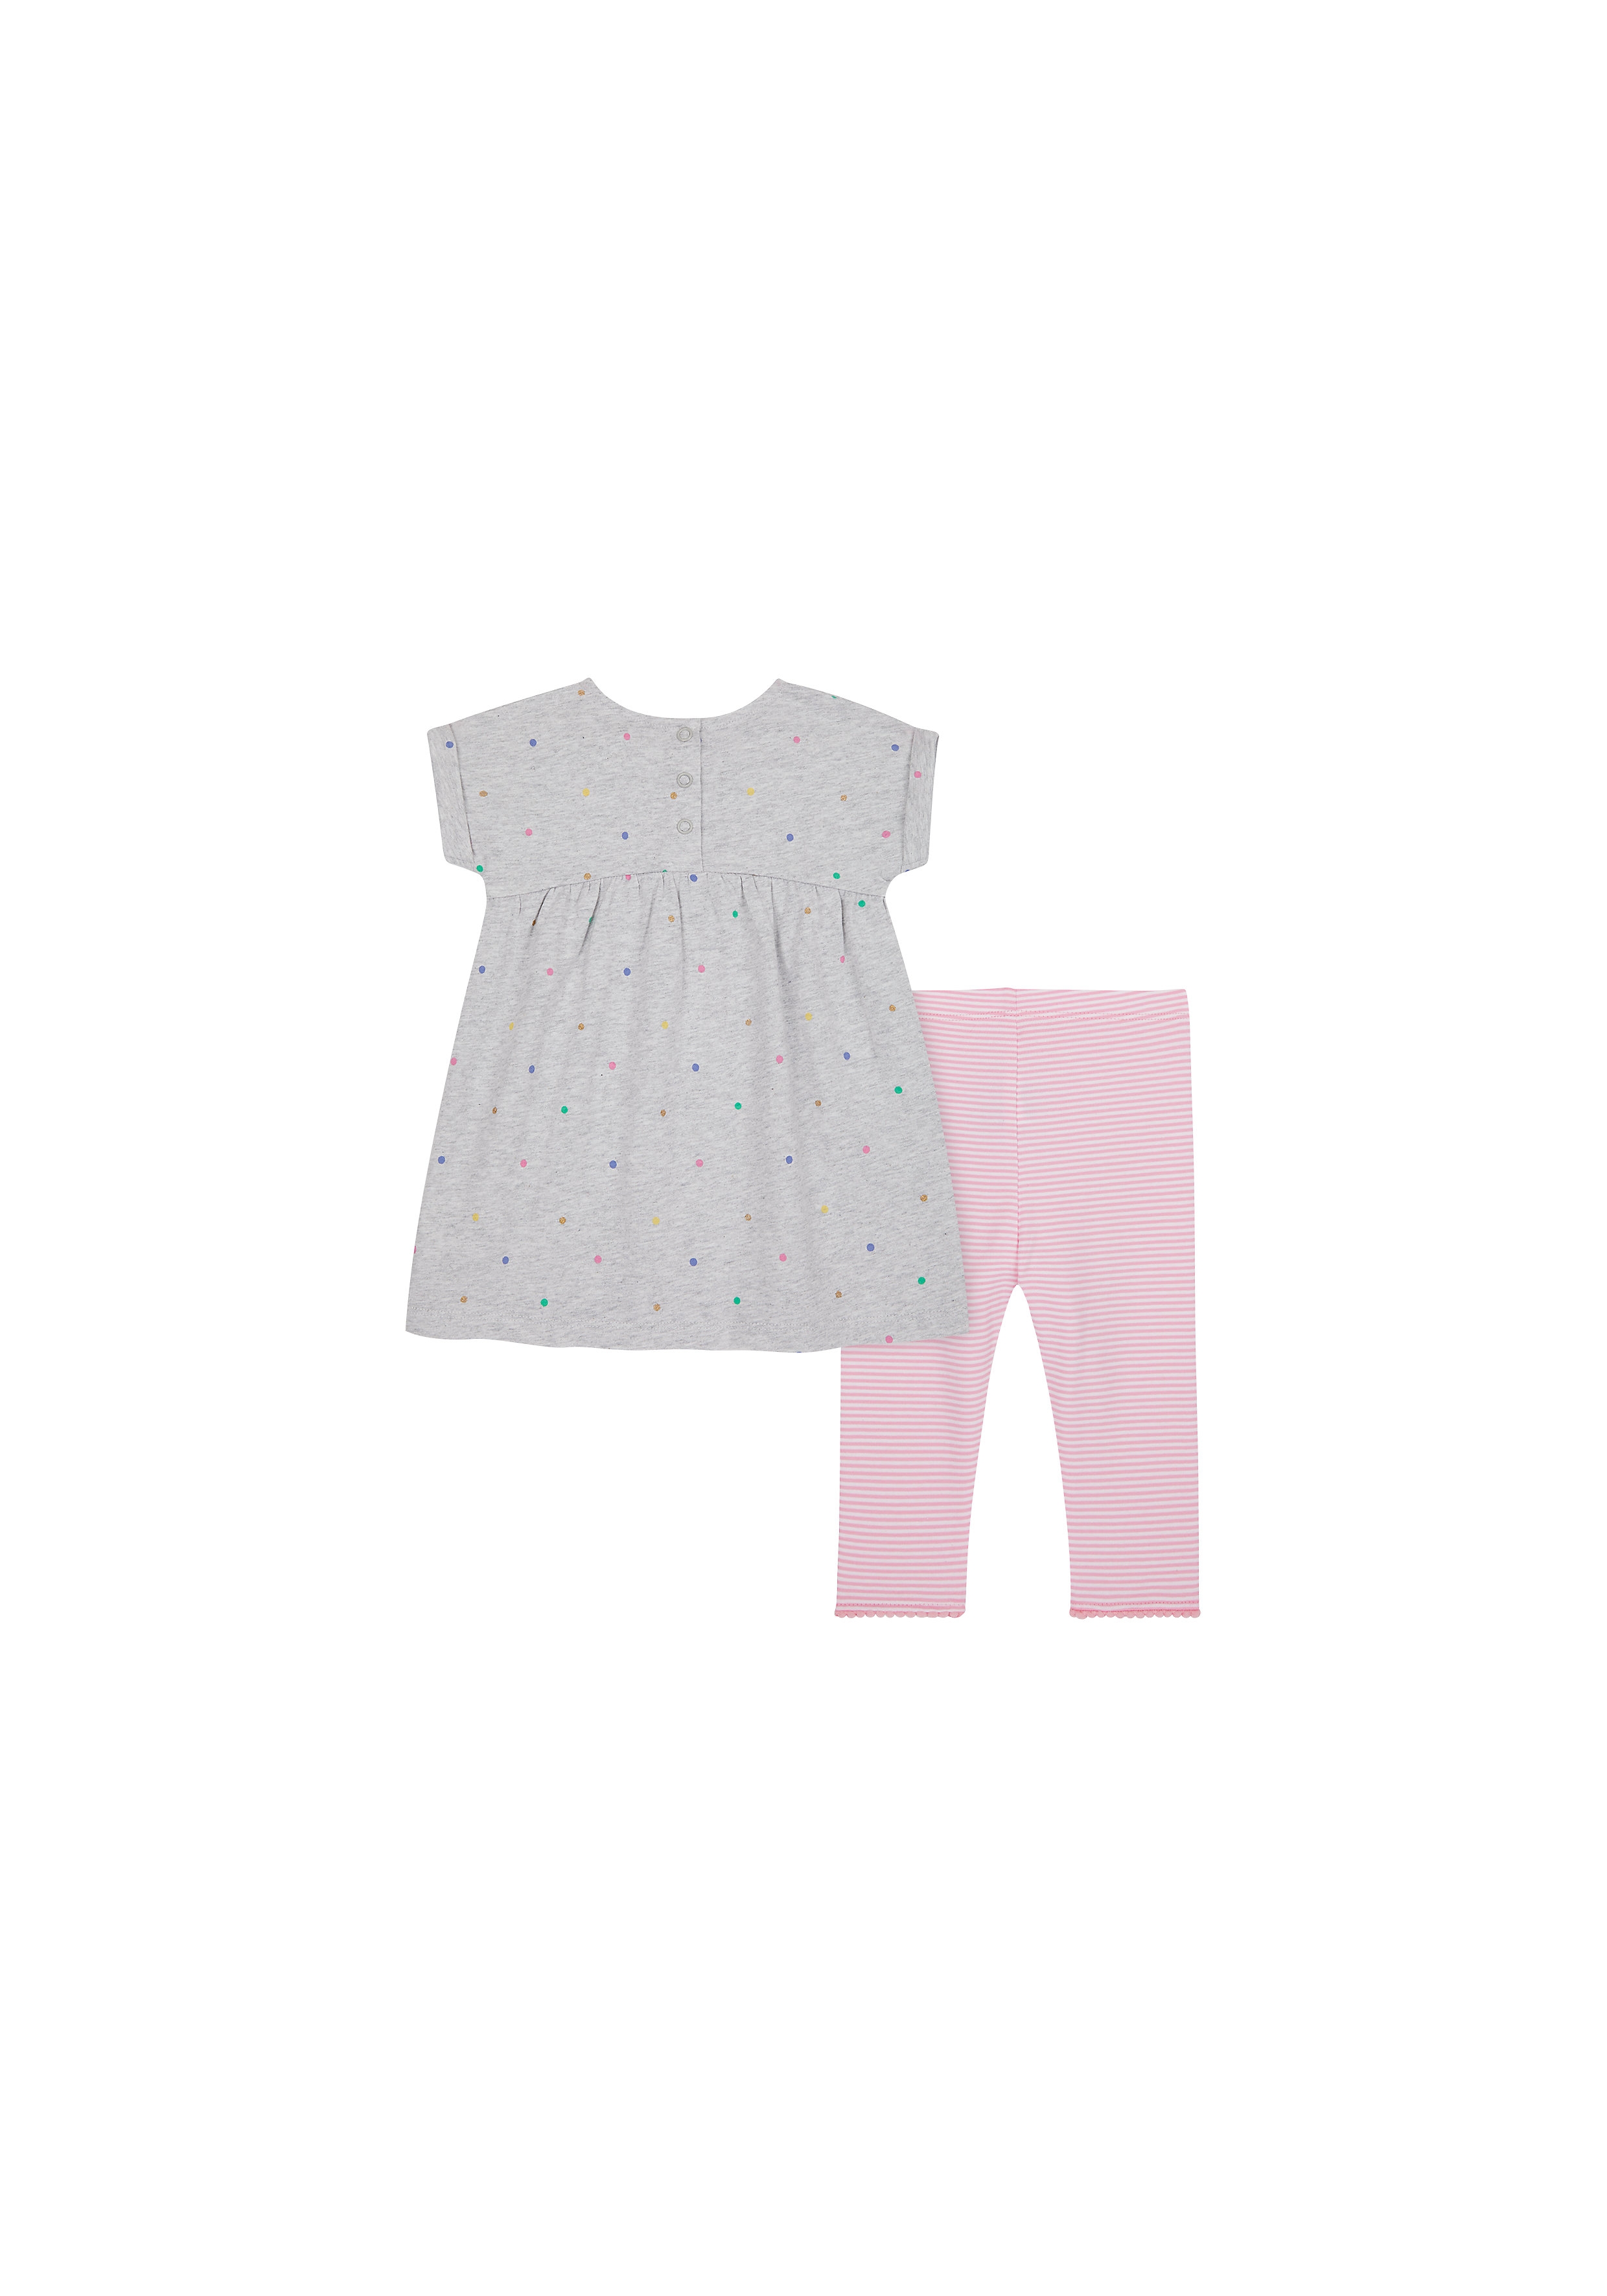 Girls Half Sleeves Dress And Legging Set Polka Dot Print - Grey Pink